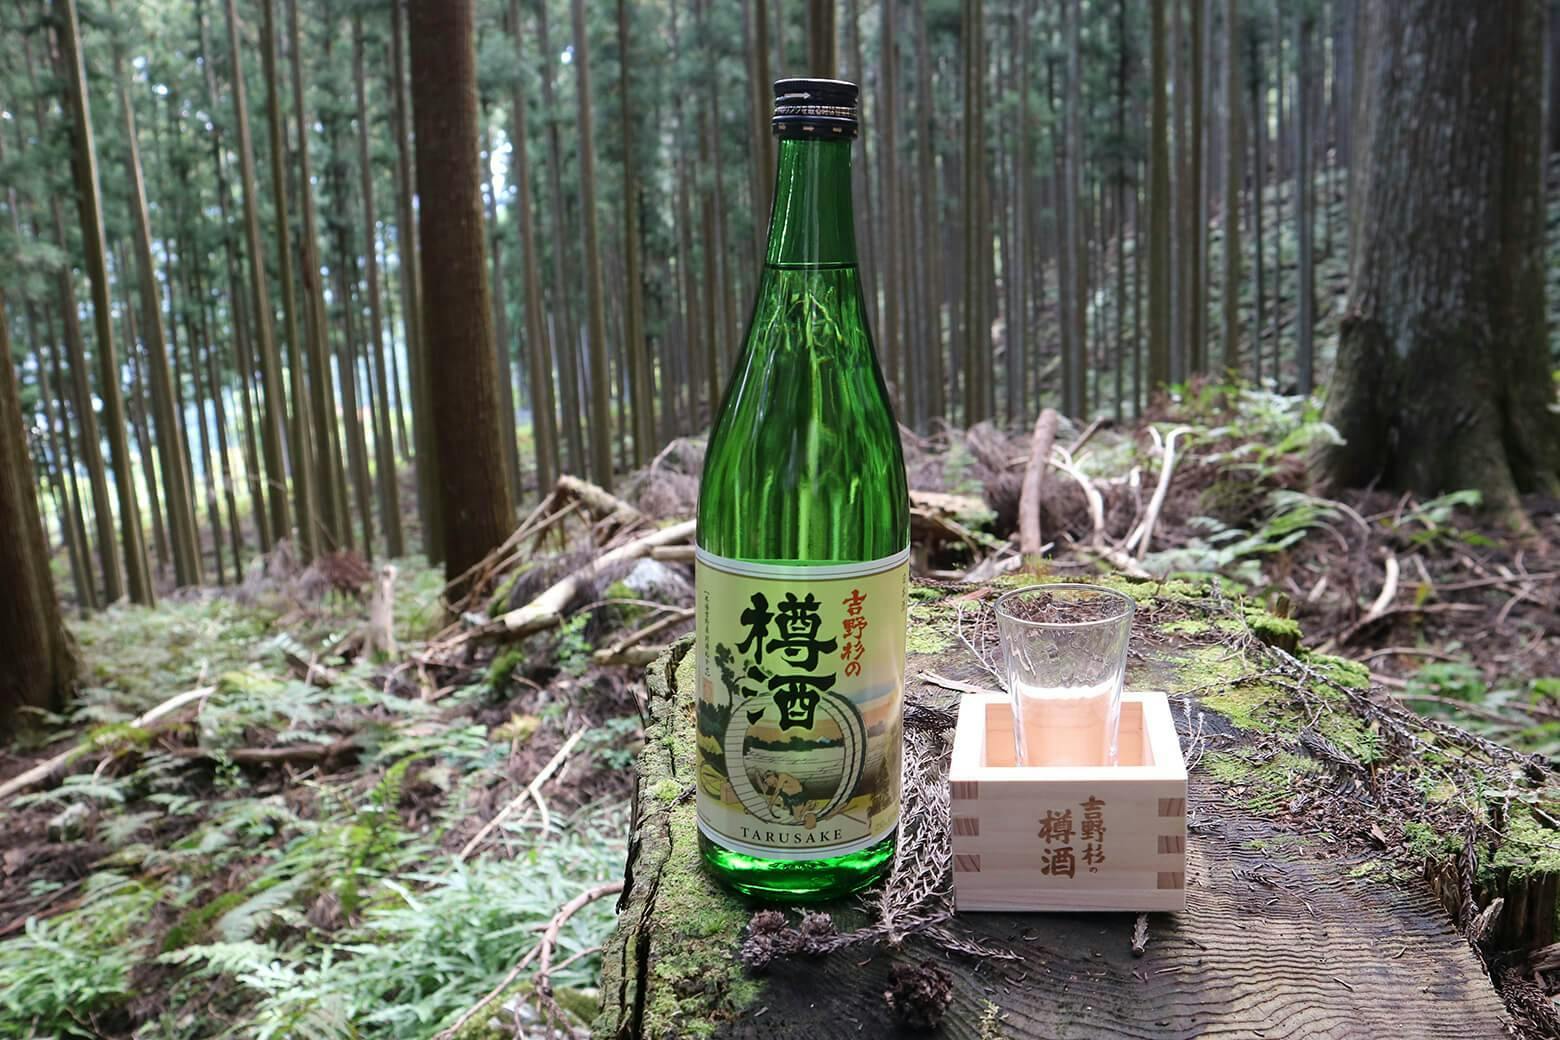 feel the calming scent of Yoshino cedar forests when drinking Choryo’s taru sake